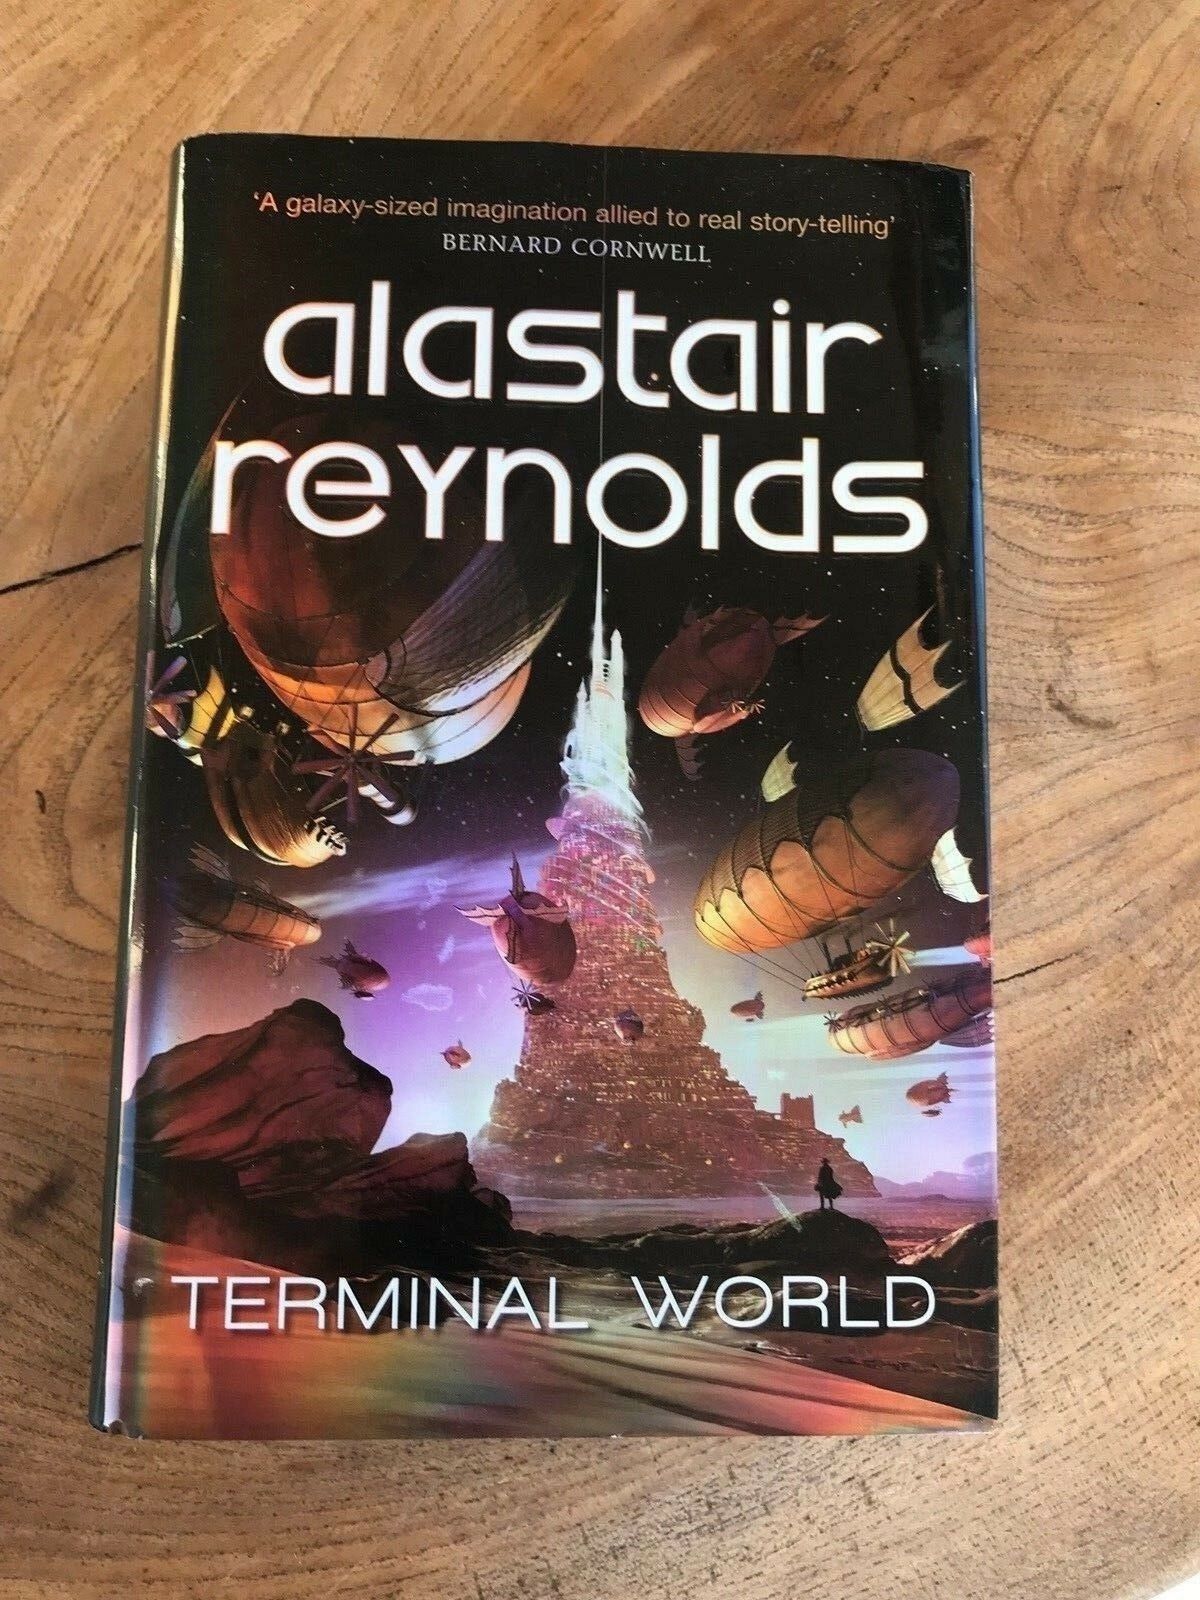 Terminal World by Alastair Reynolds